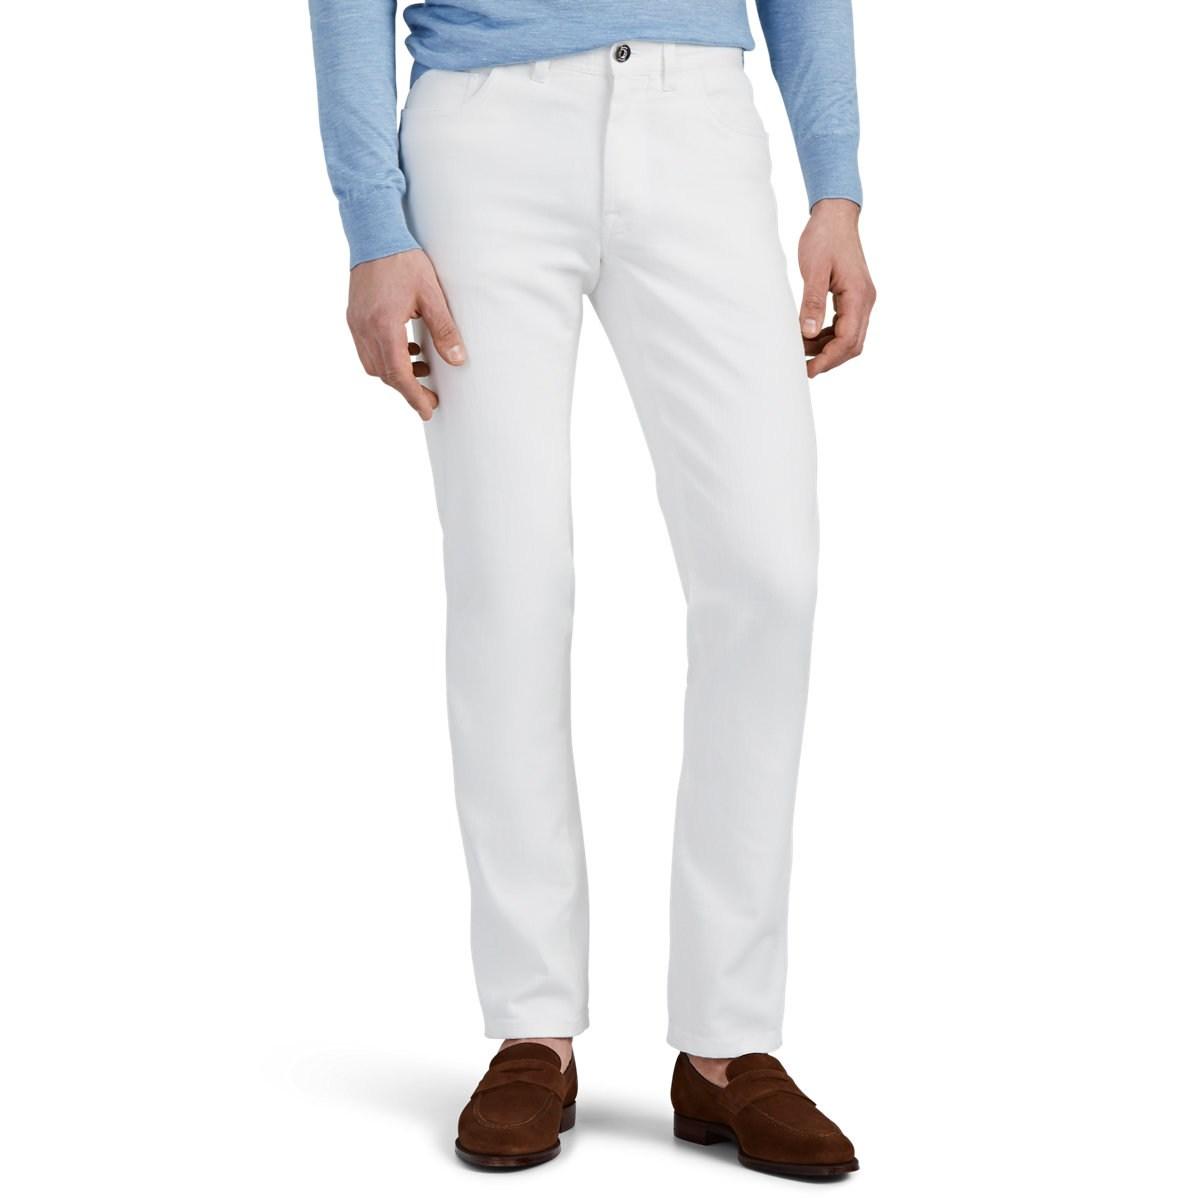 Brioni Denim Slim Jeans in White for Men - Lyst